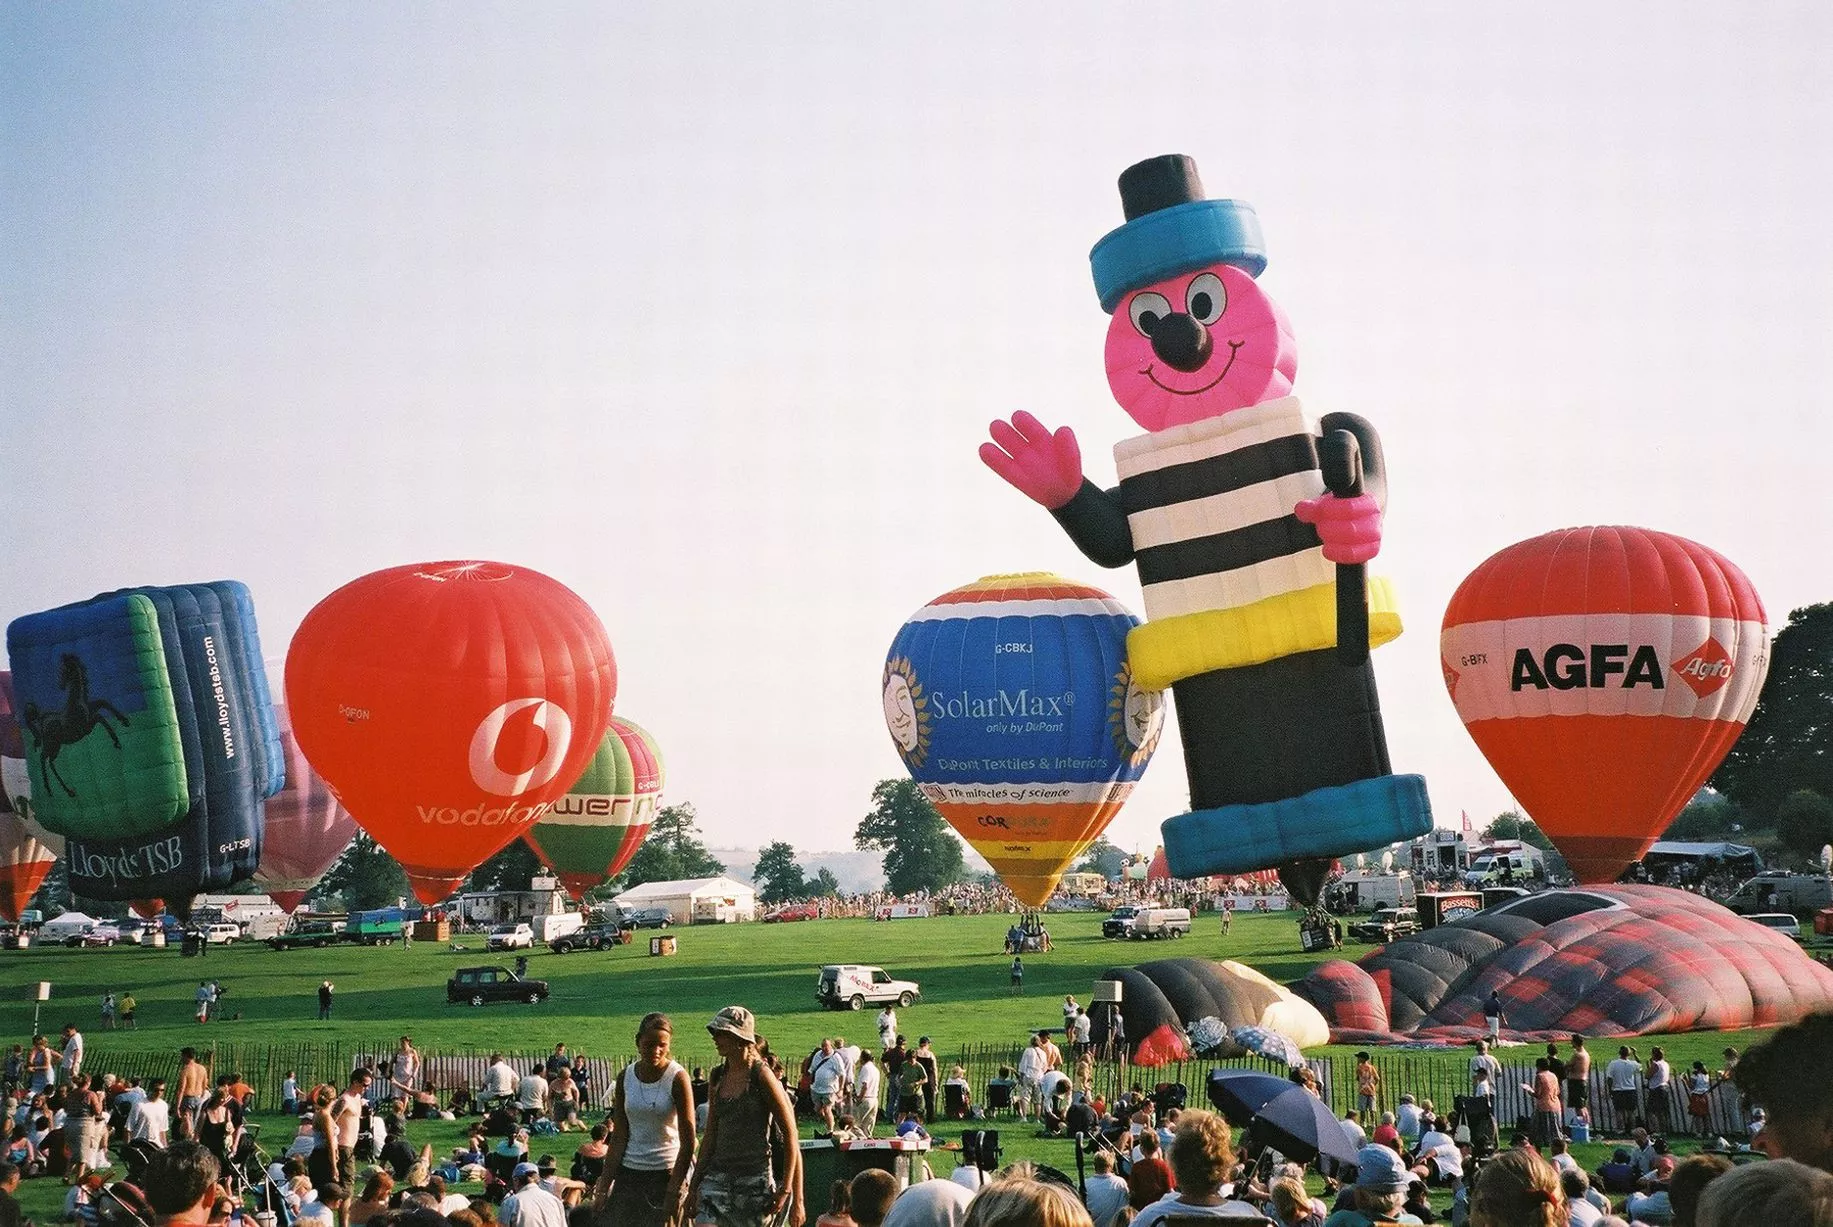 Hot Air Balloon Festival in Sikeston Missouri